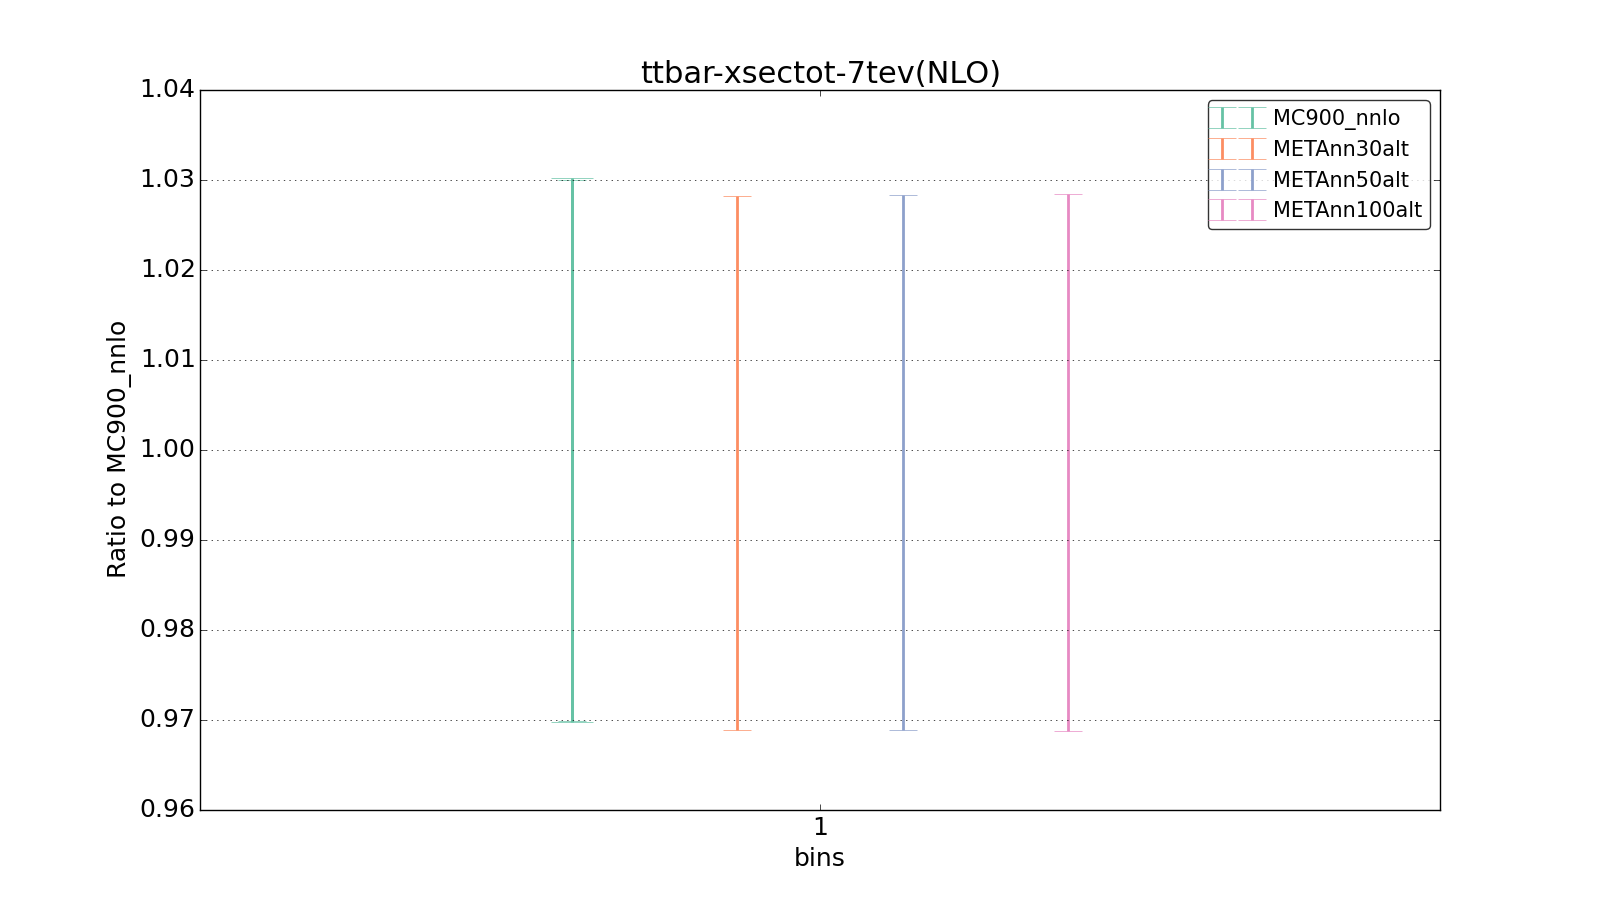 figure plots/metaphenonew/ciplot_ttbar-xsectot-7tev(NLO).png